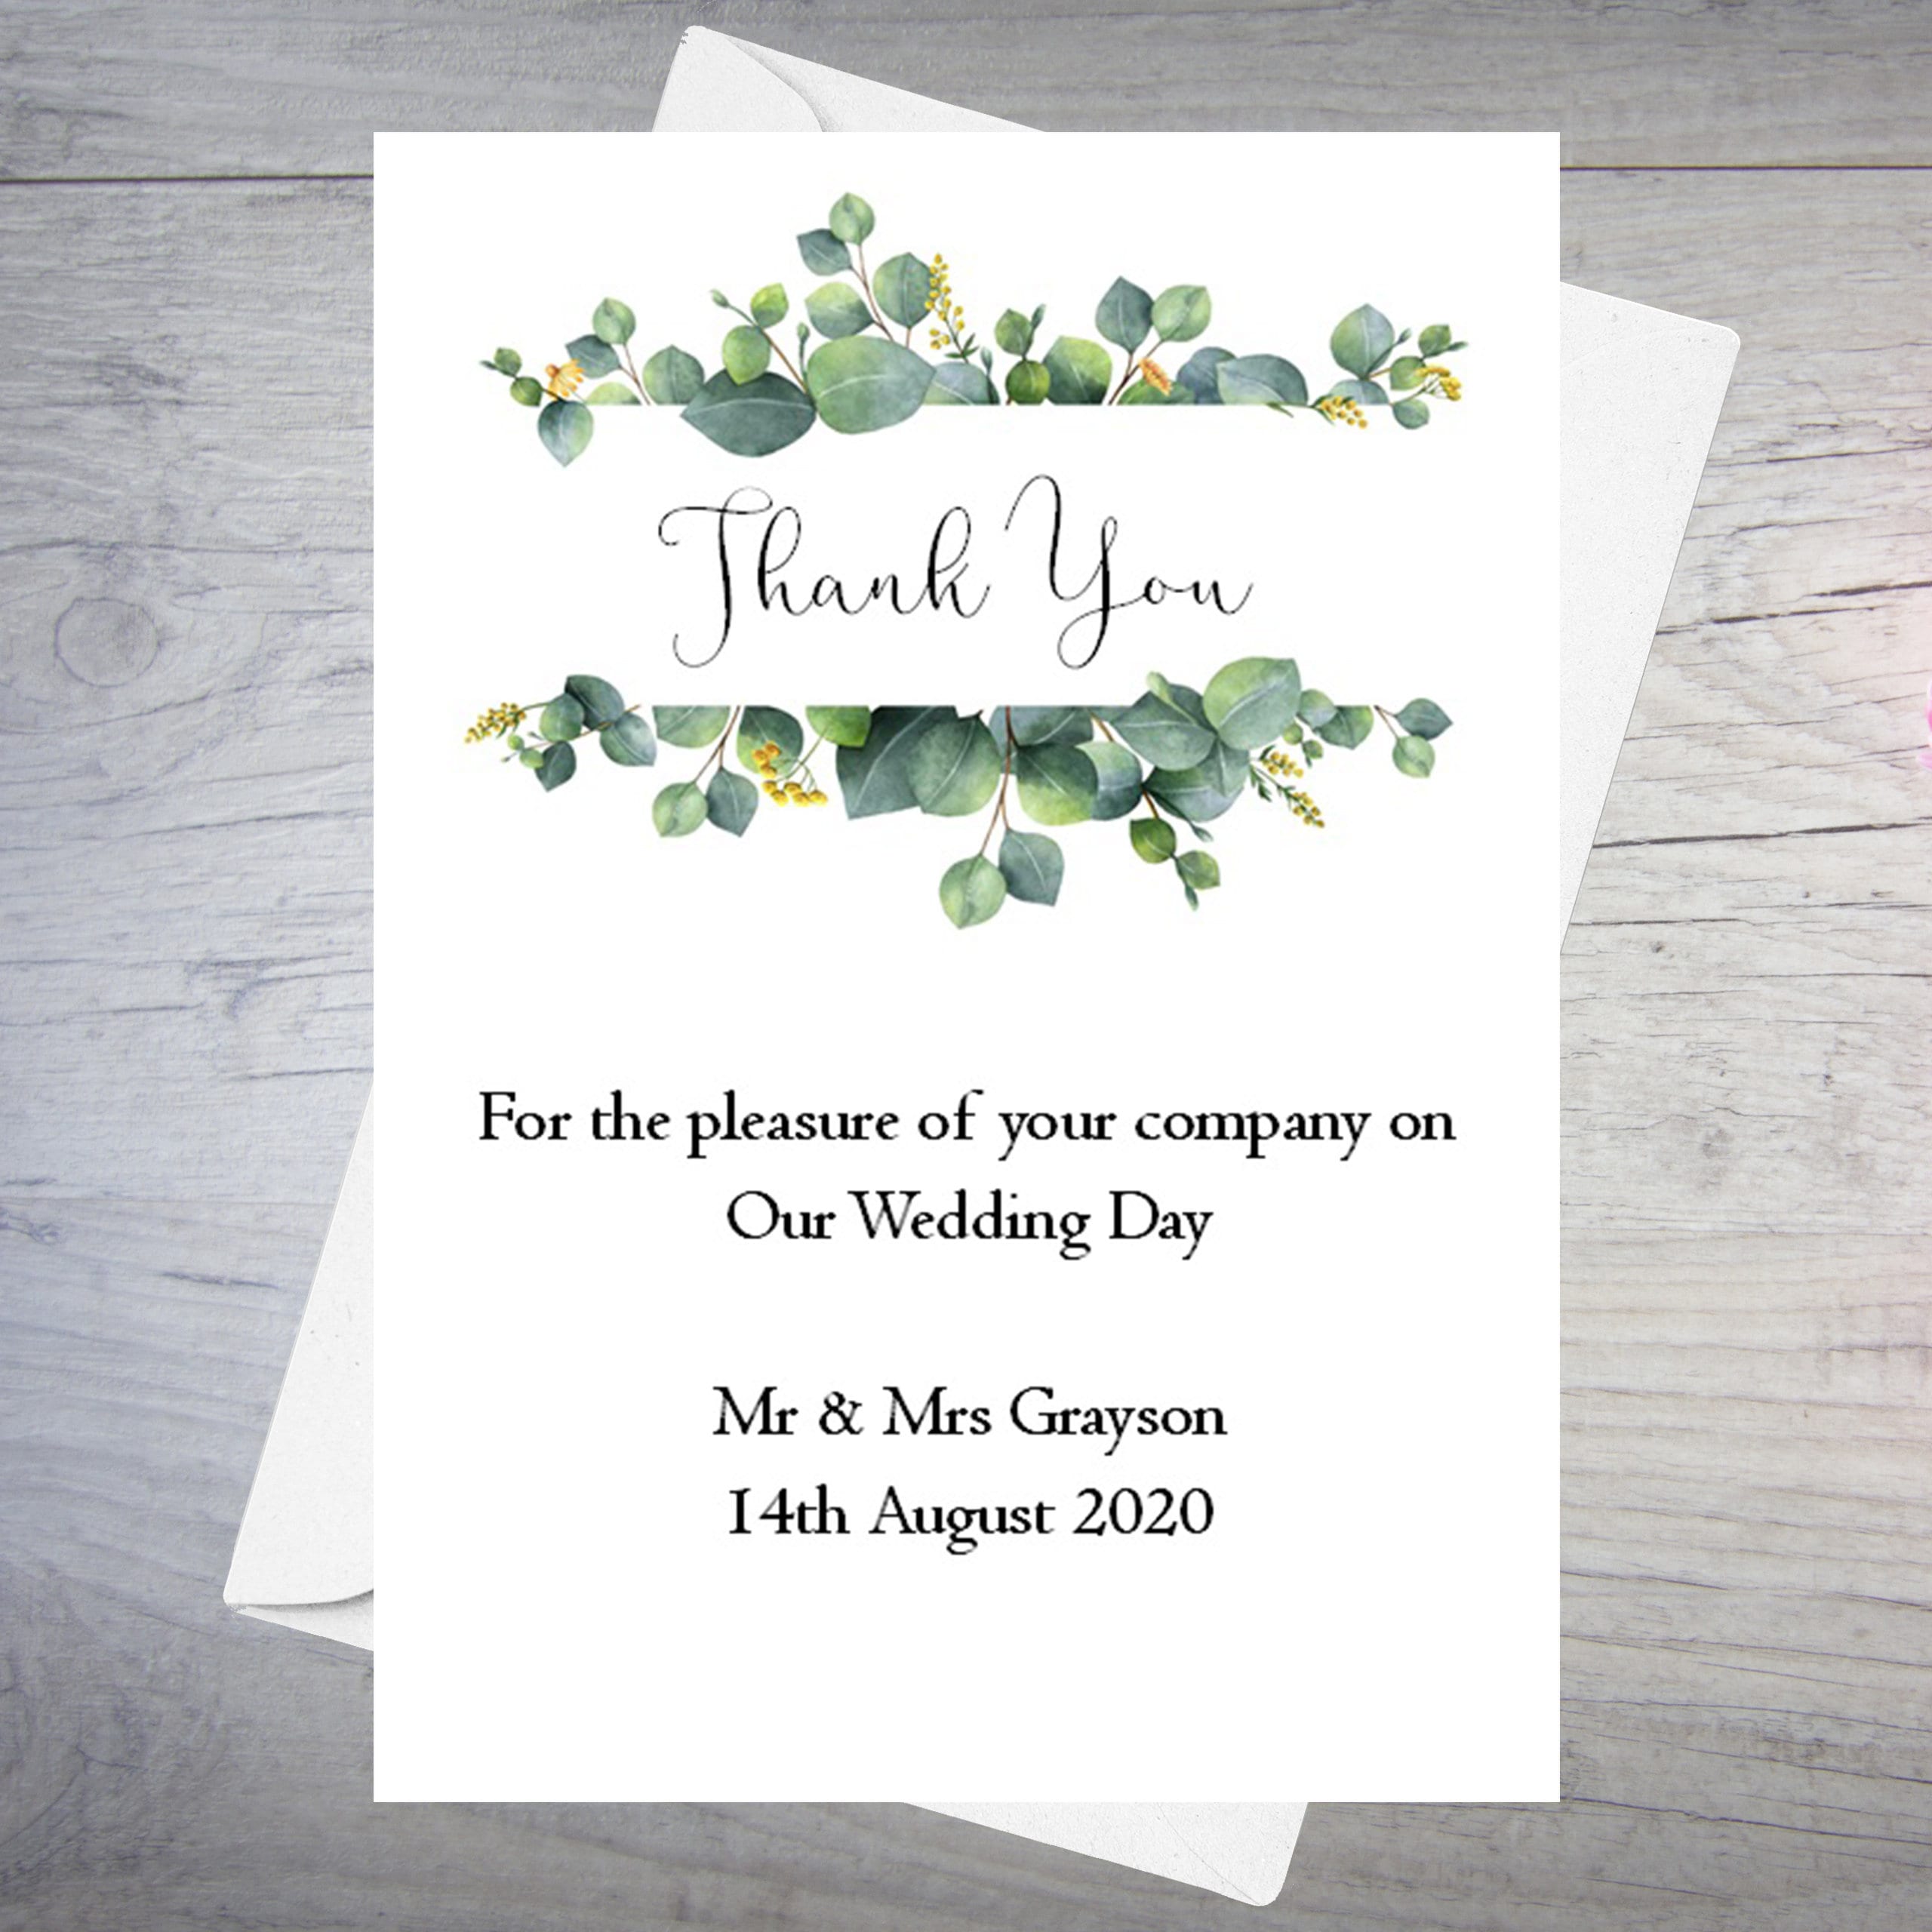 Photos Personalised Wedding Thank You Cards inc packs of 10 Envelopes 